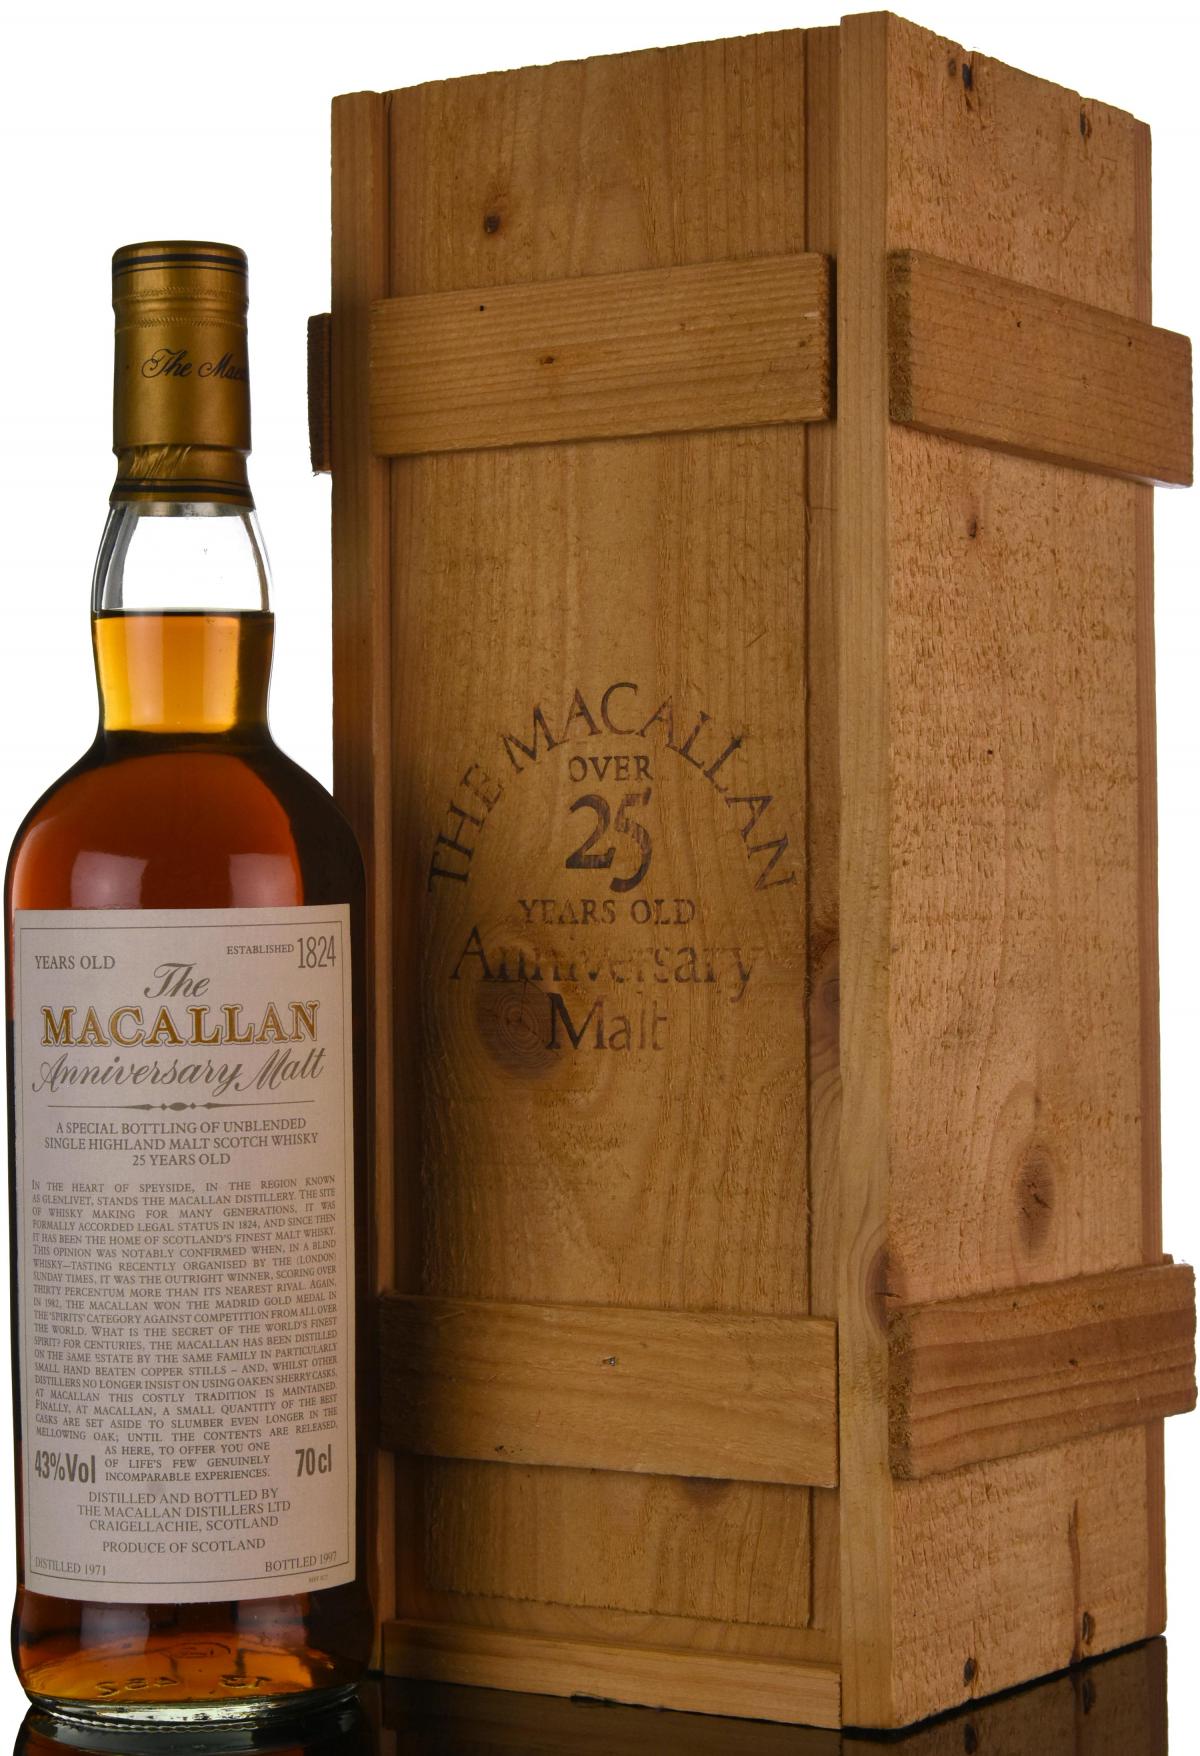 Macallan 1971-1997 - 25 Year Old - Anniversary Malt